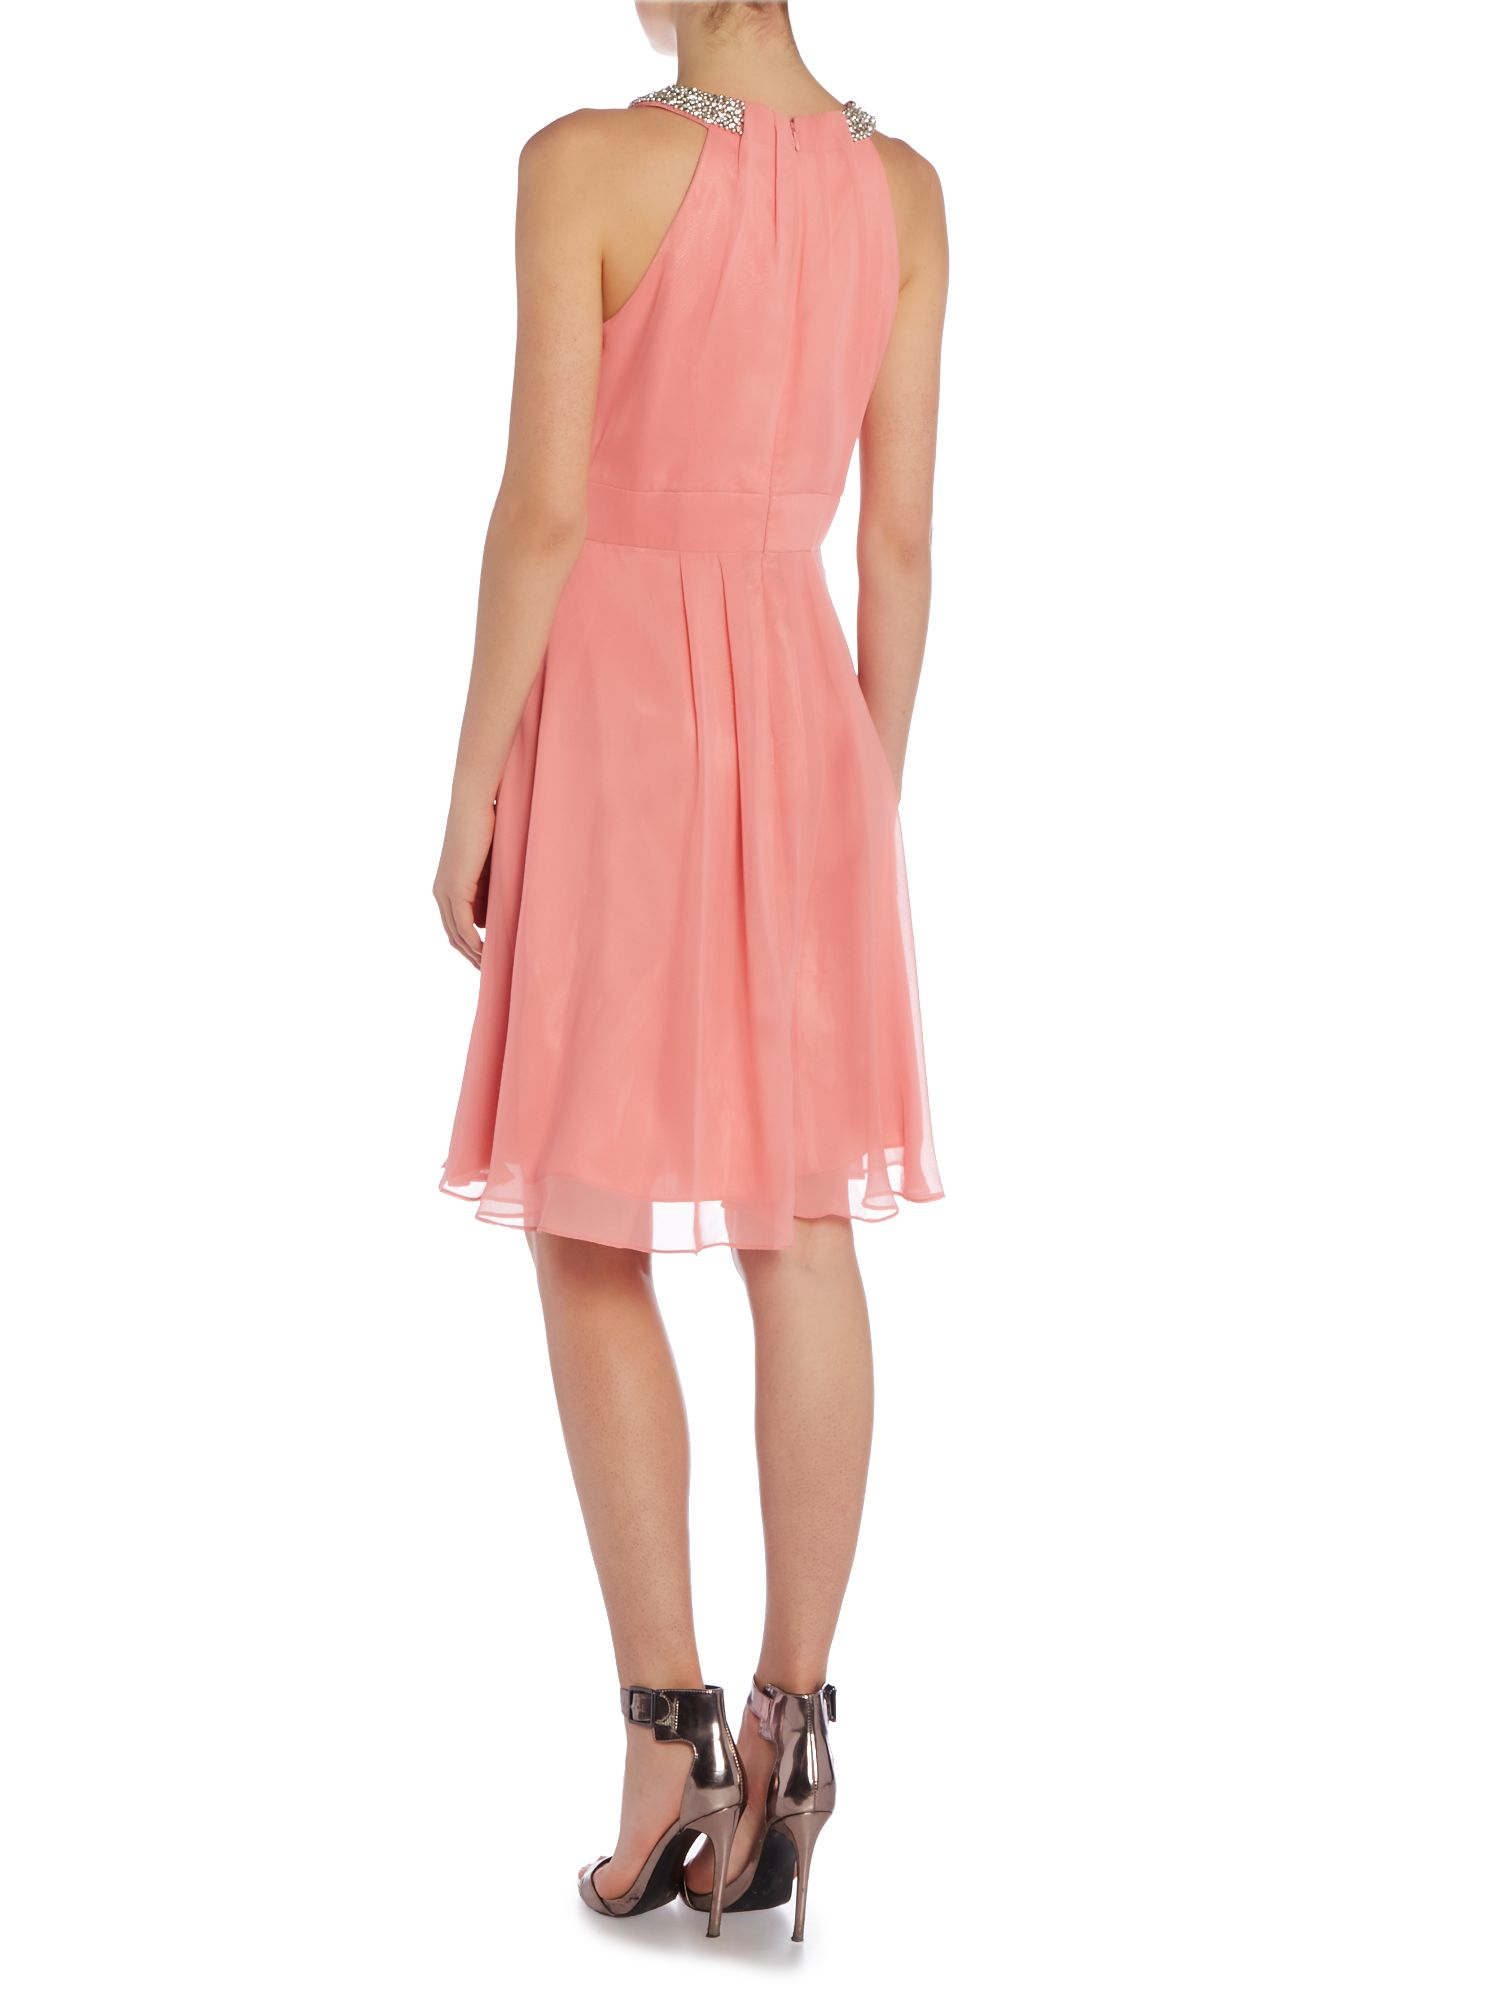 Eliza J Beaded Halter Neck Chiffon Dress in Coral (Pink) - Lyst